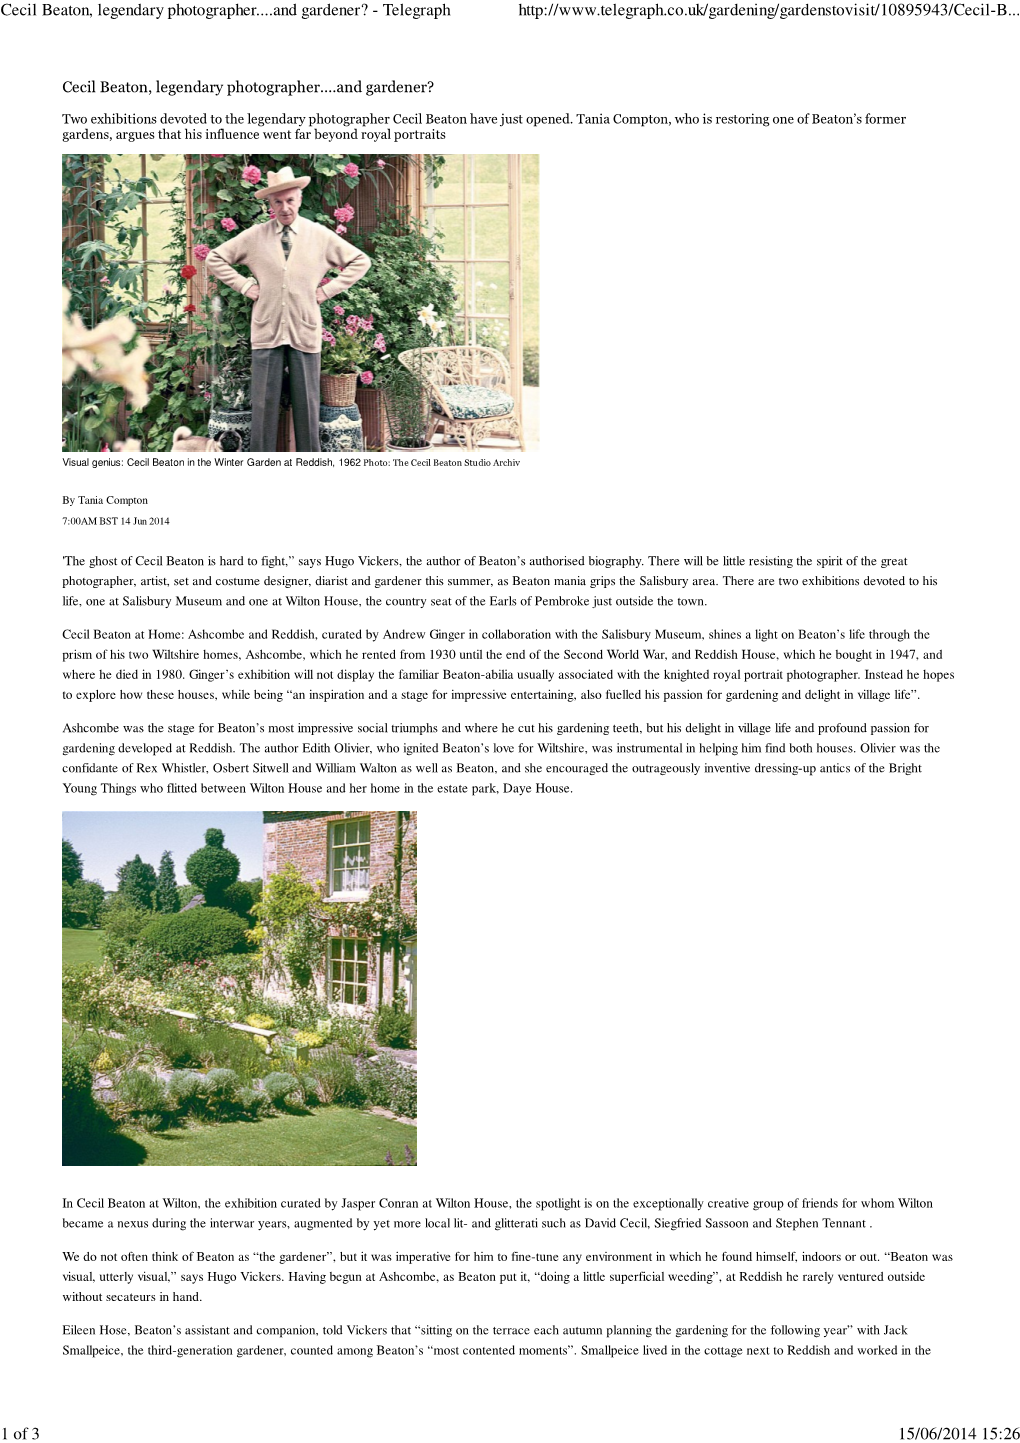 Cecil Beaton, Legendary Photographer...And Gardener?